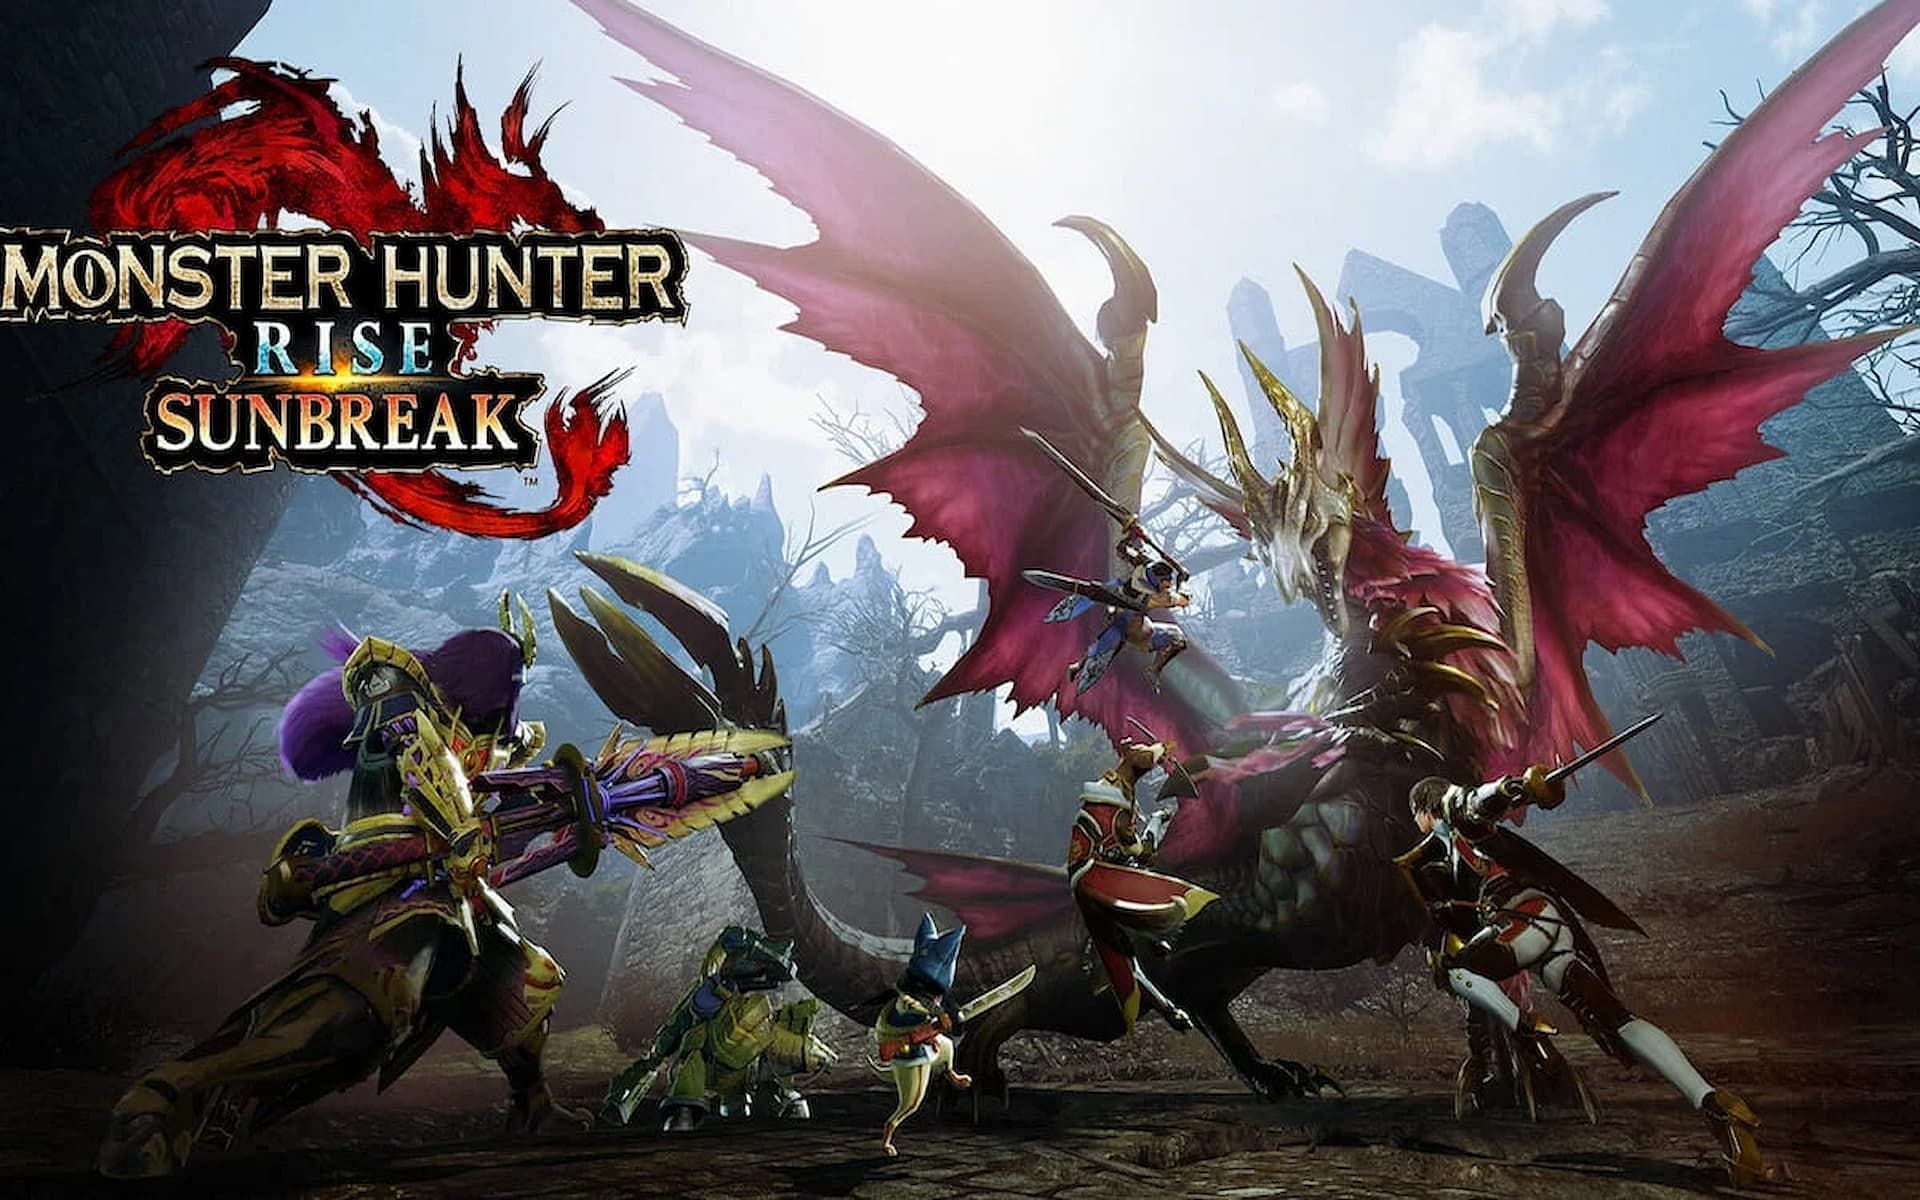 A promotional image for the Sunbreak expansion (Image via Capcom)